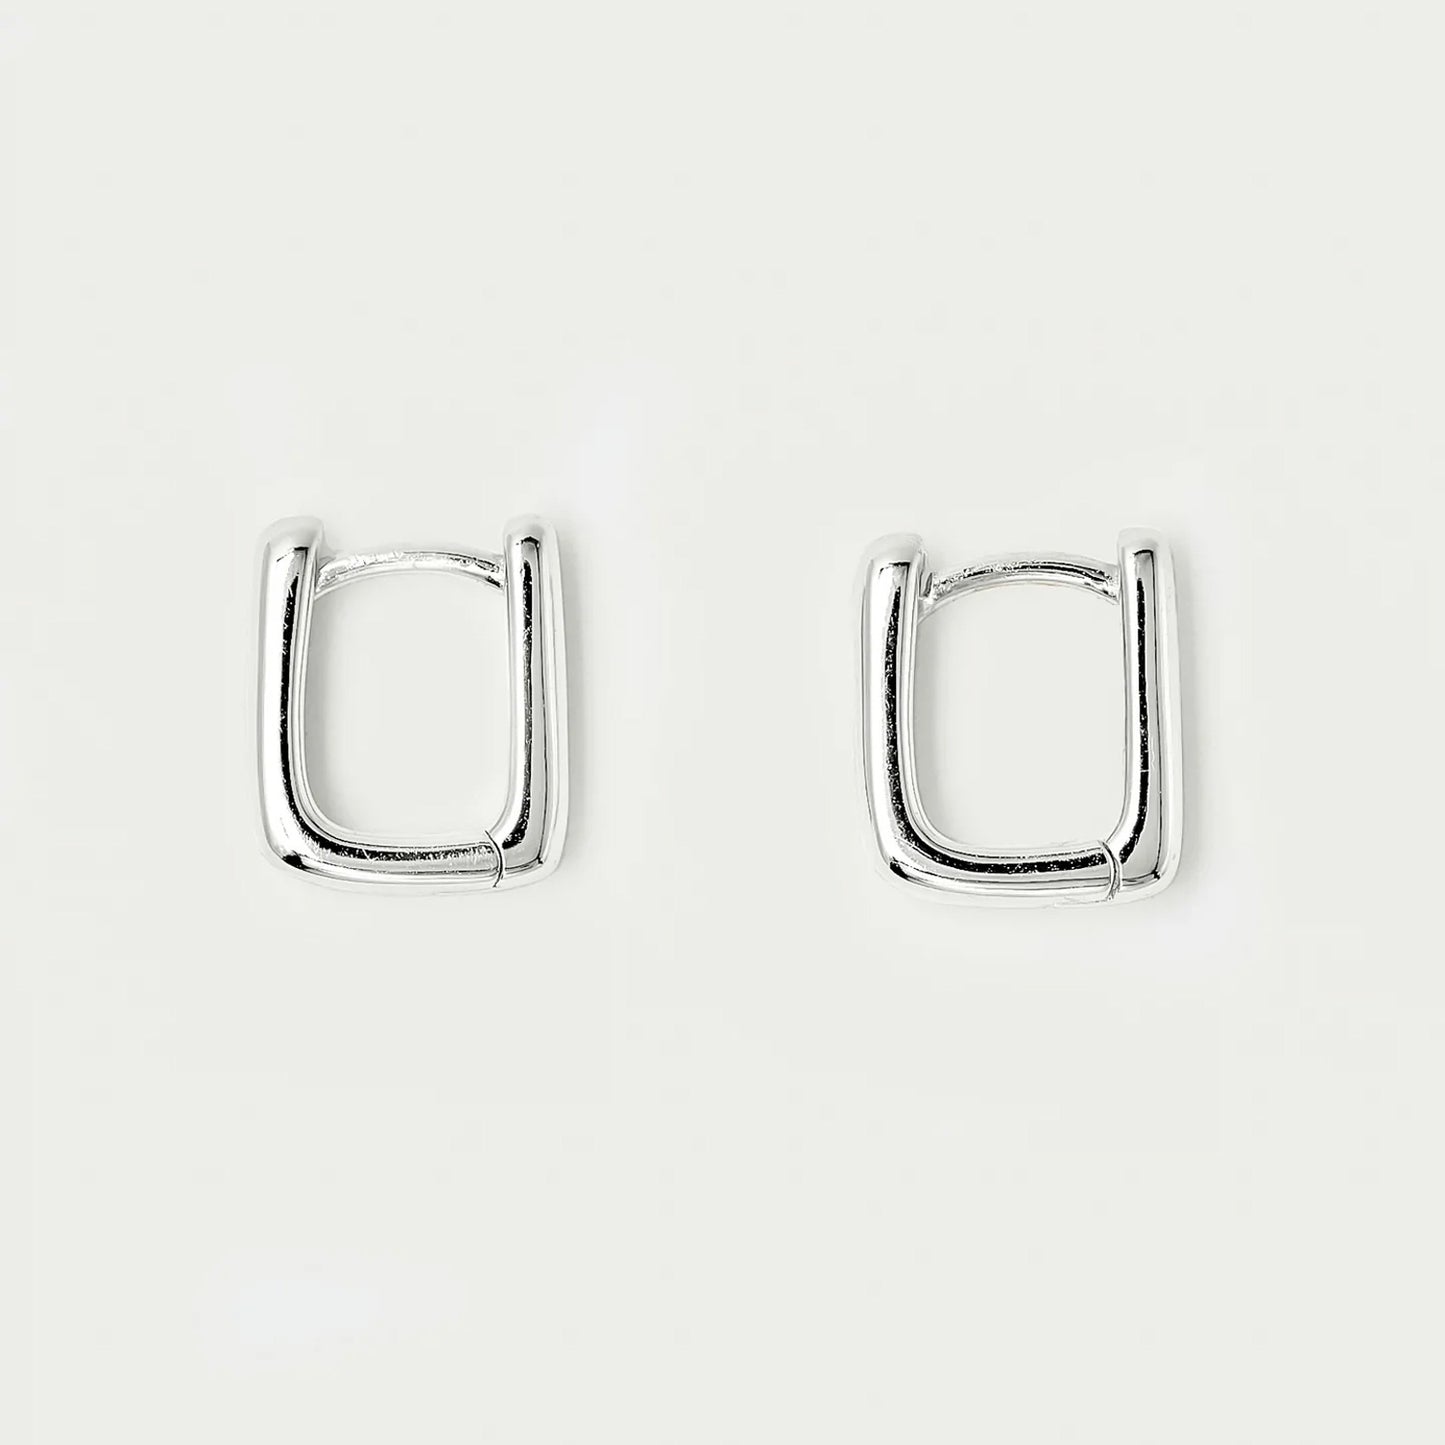 Brie Leon - Mini Bloq Earrings - Silver